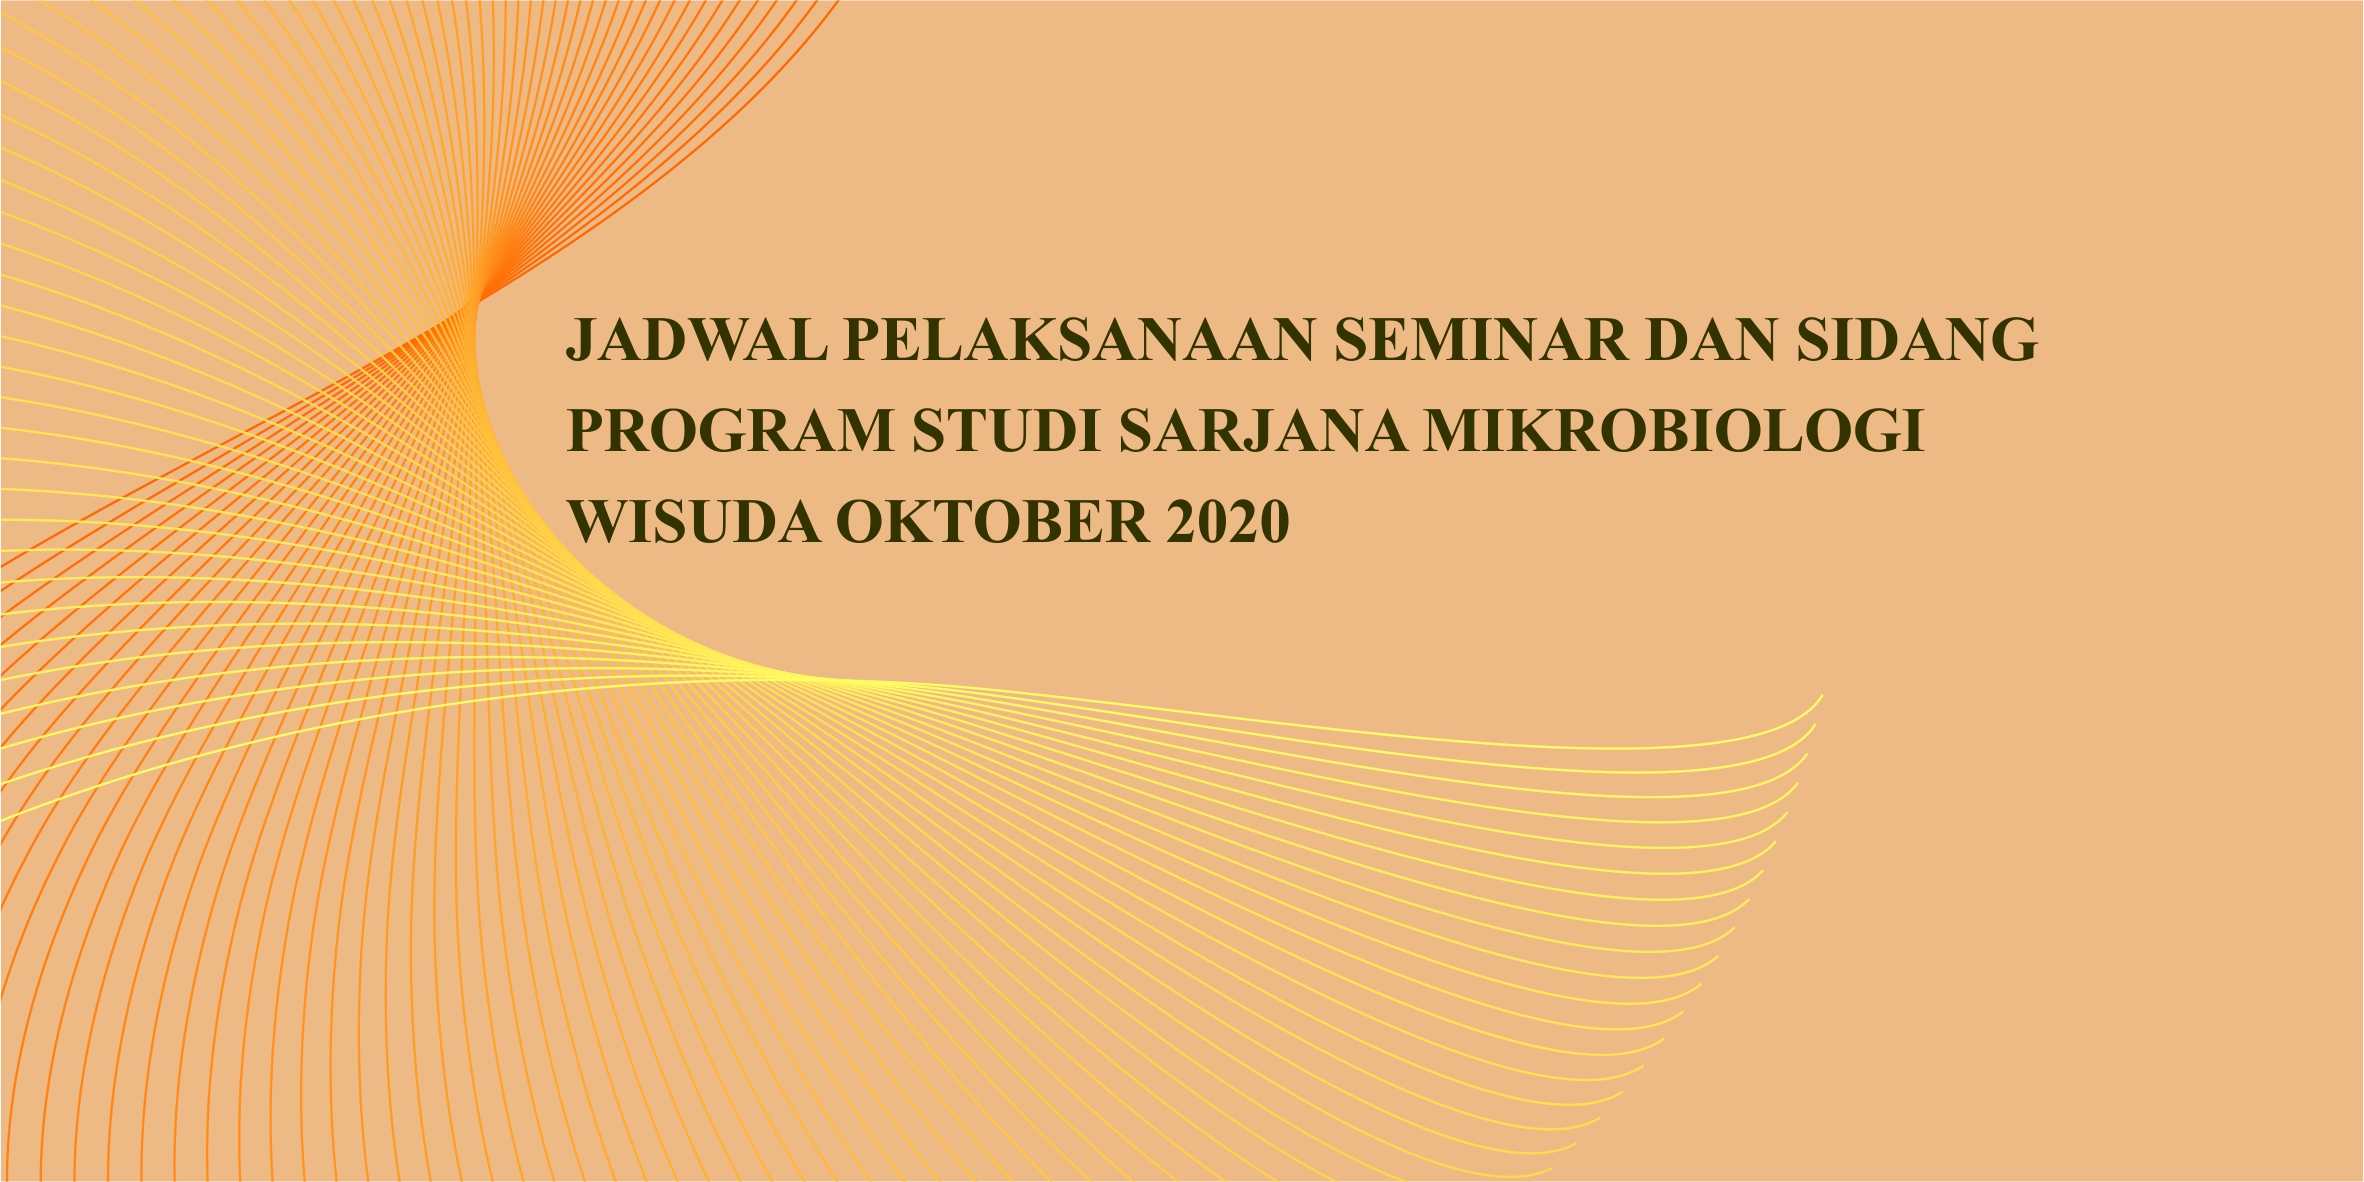 Jadwal Pelaksanaan Seminar dan Sidang Program Studi Sarjana Mikrobiologi Wisuda Oktober 2020